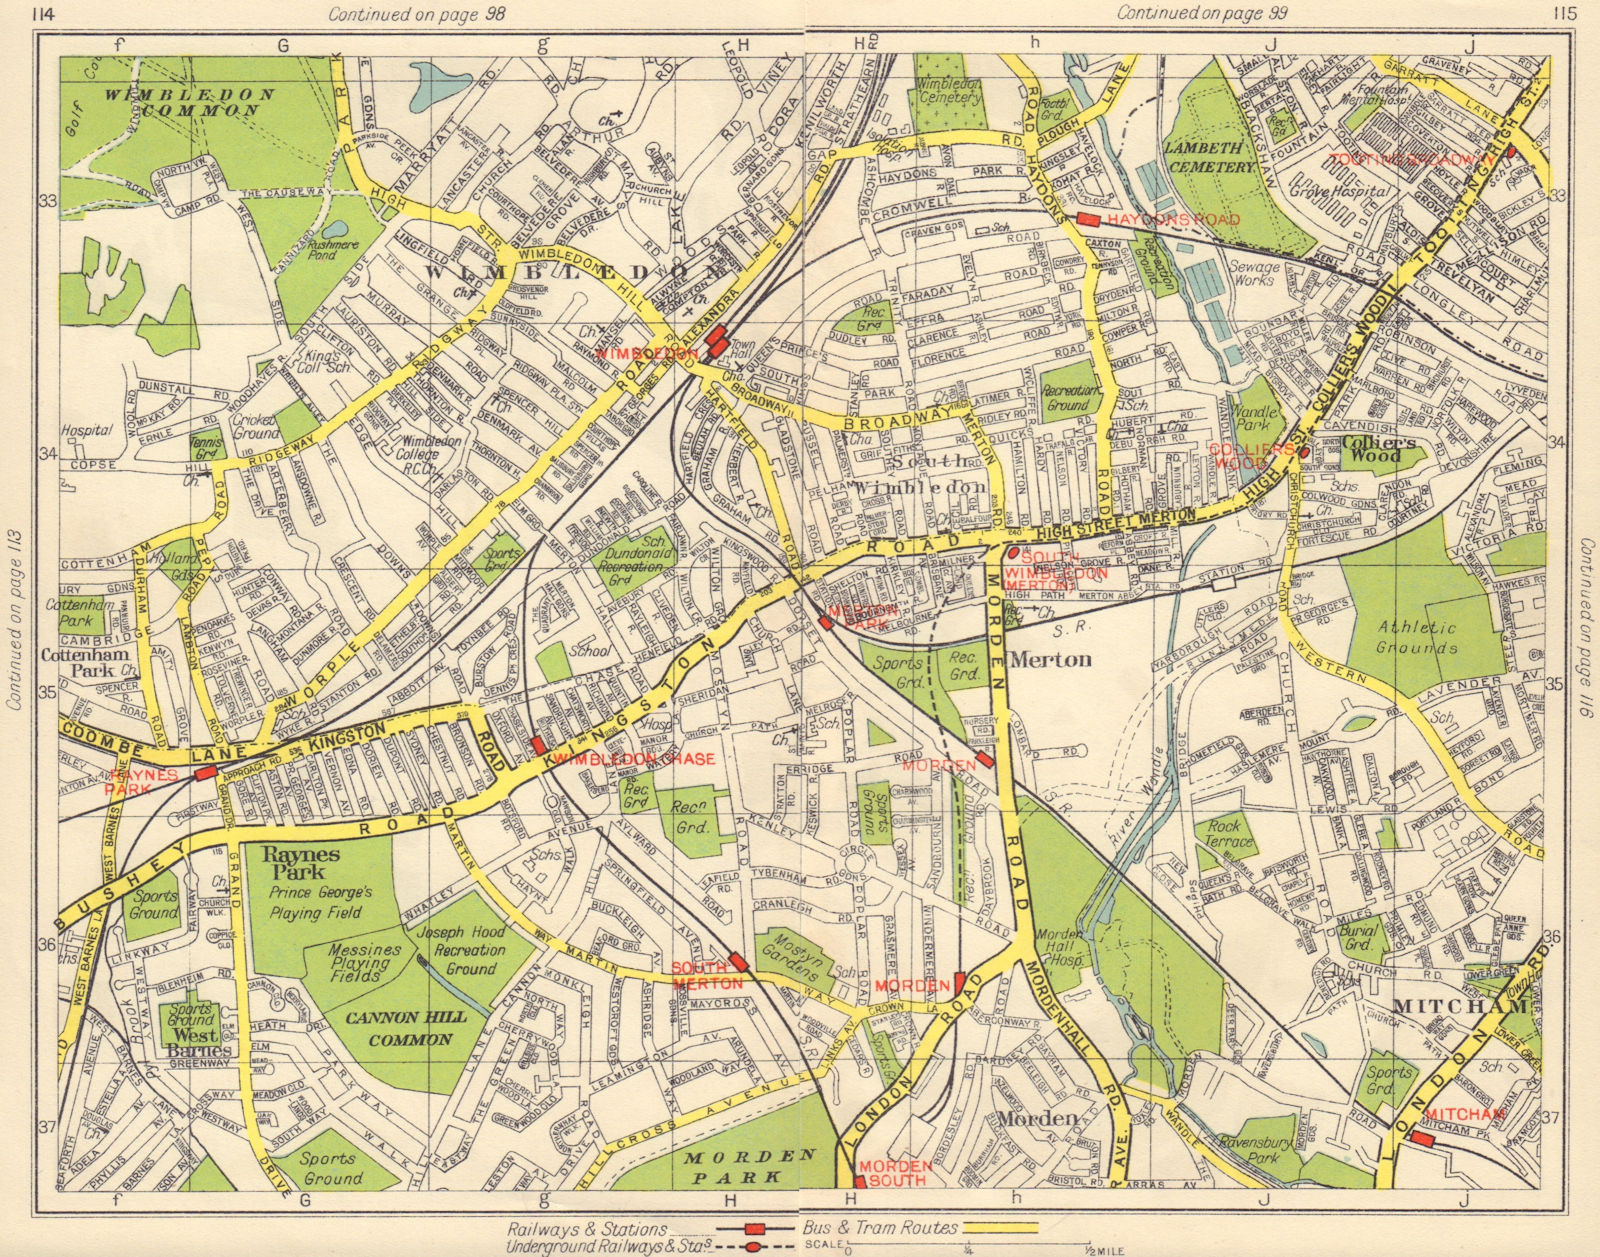 SW LONDON. Wimbledon Collier's Wood Merton Morden Raynes Park Mitcham 1948 map